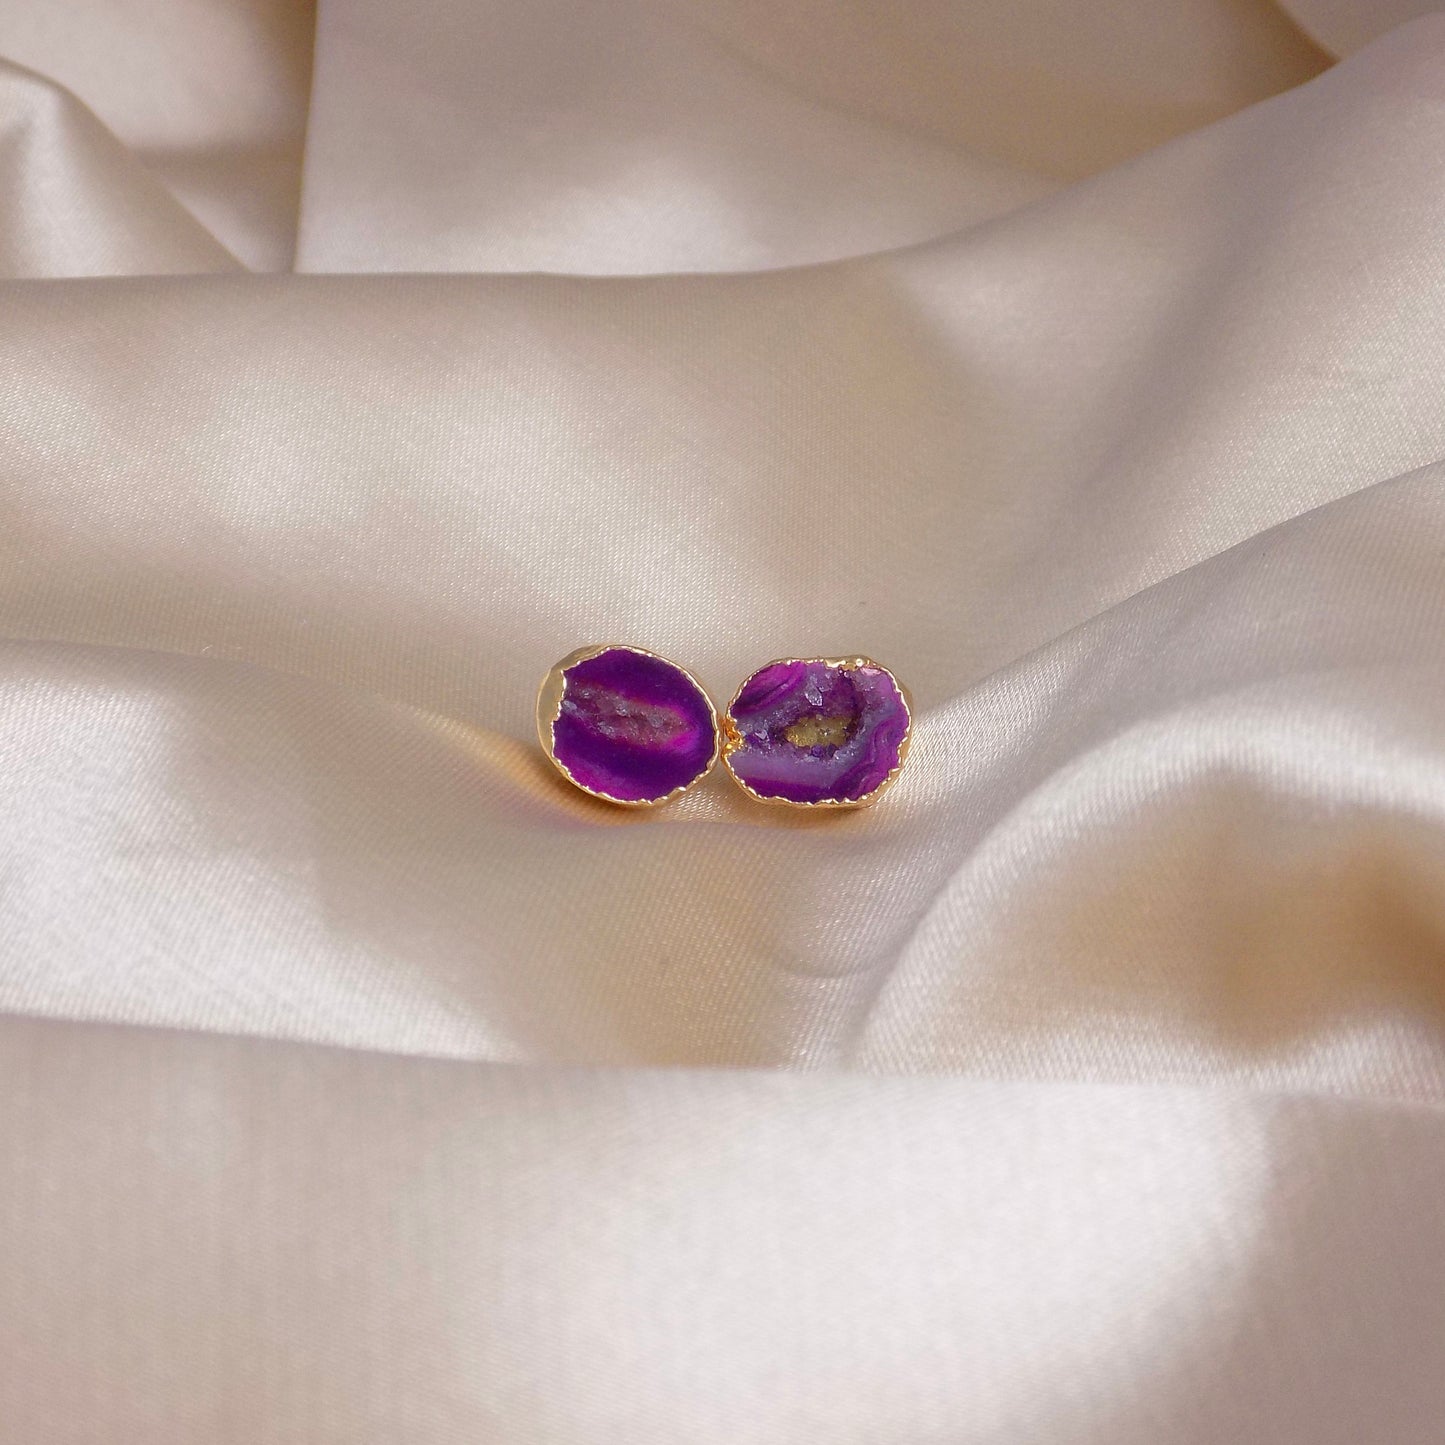 Unique Pink Gemstone Stud Earrings Gold, Geode Cave Crystal Earrings, Gift Women, G15-71